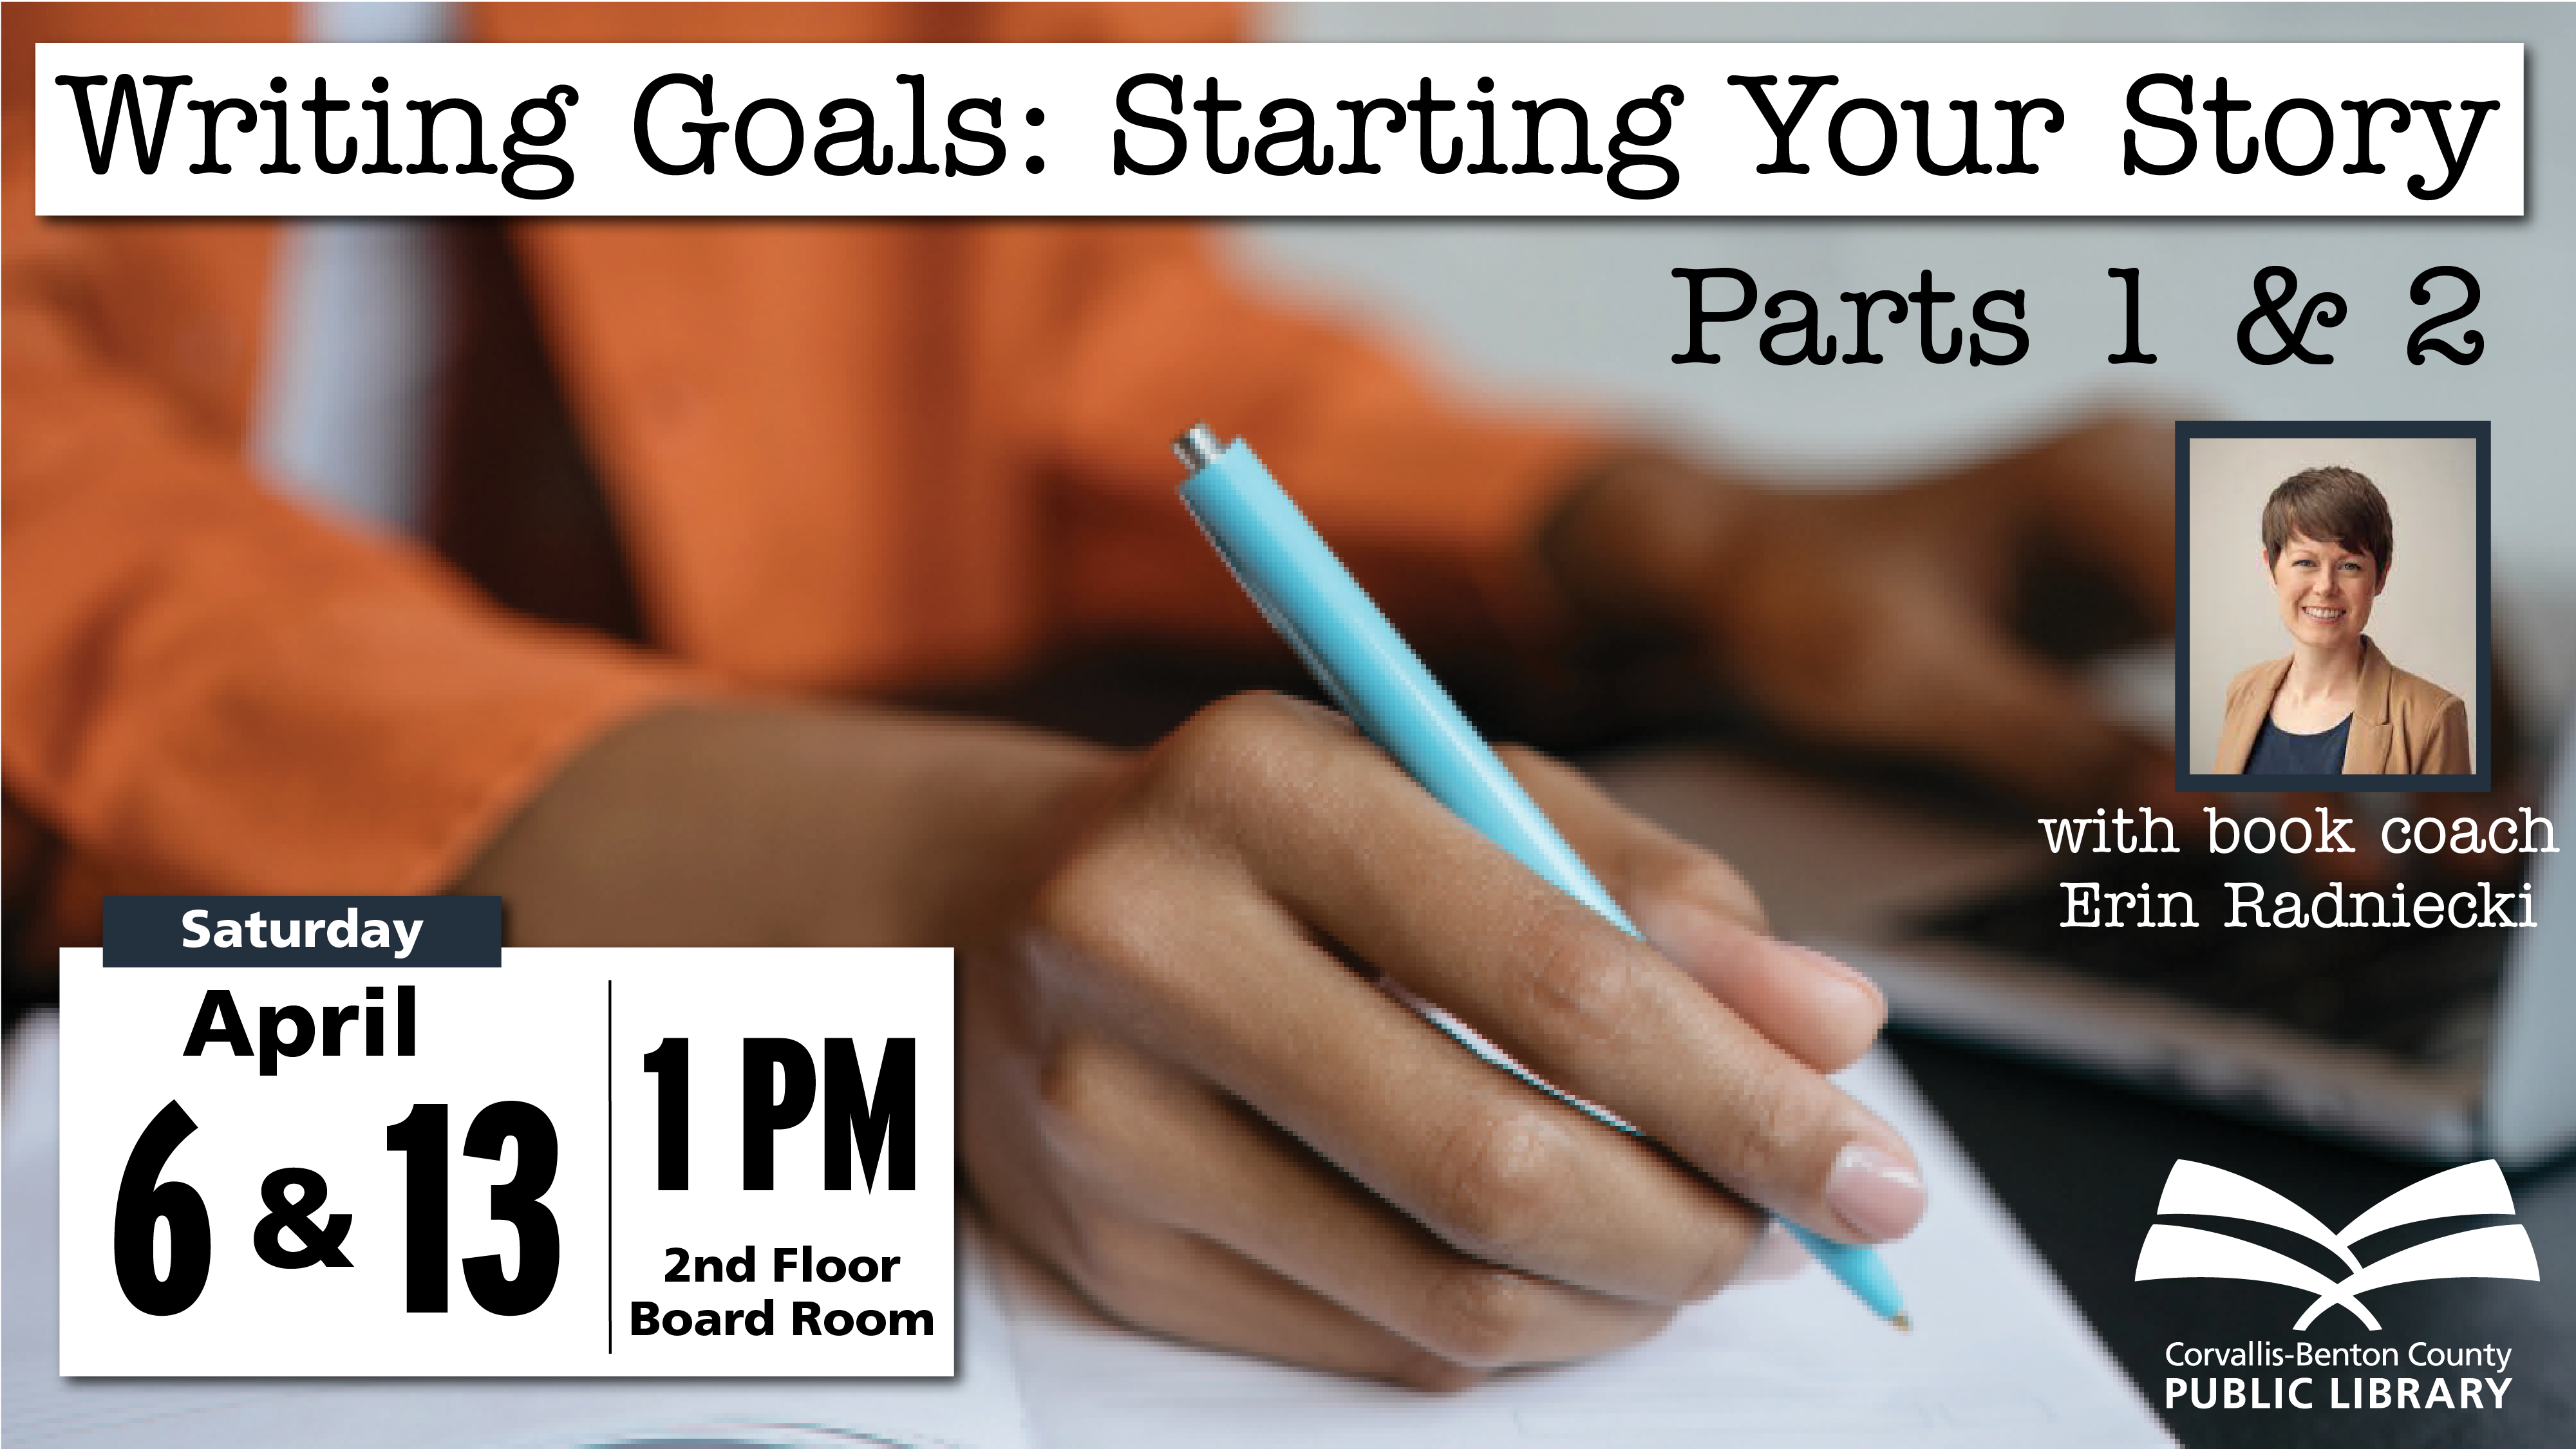 Writing Goals: Starting Your Story. Part 1: April 6, 1 PM. Park 2: April 13, 1 PM